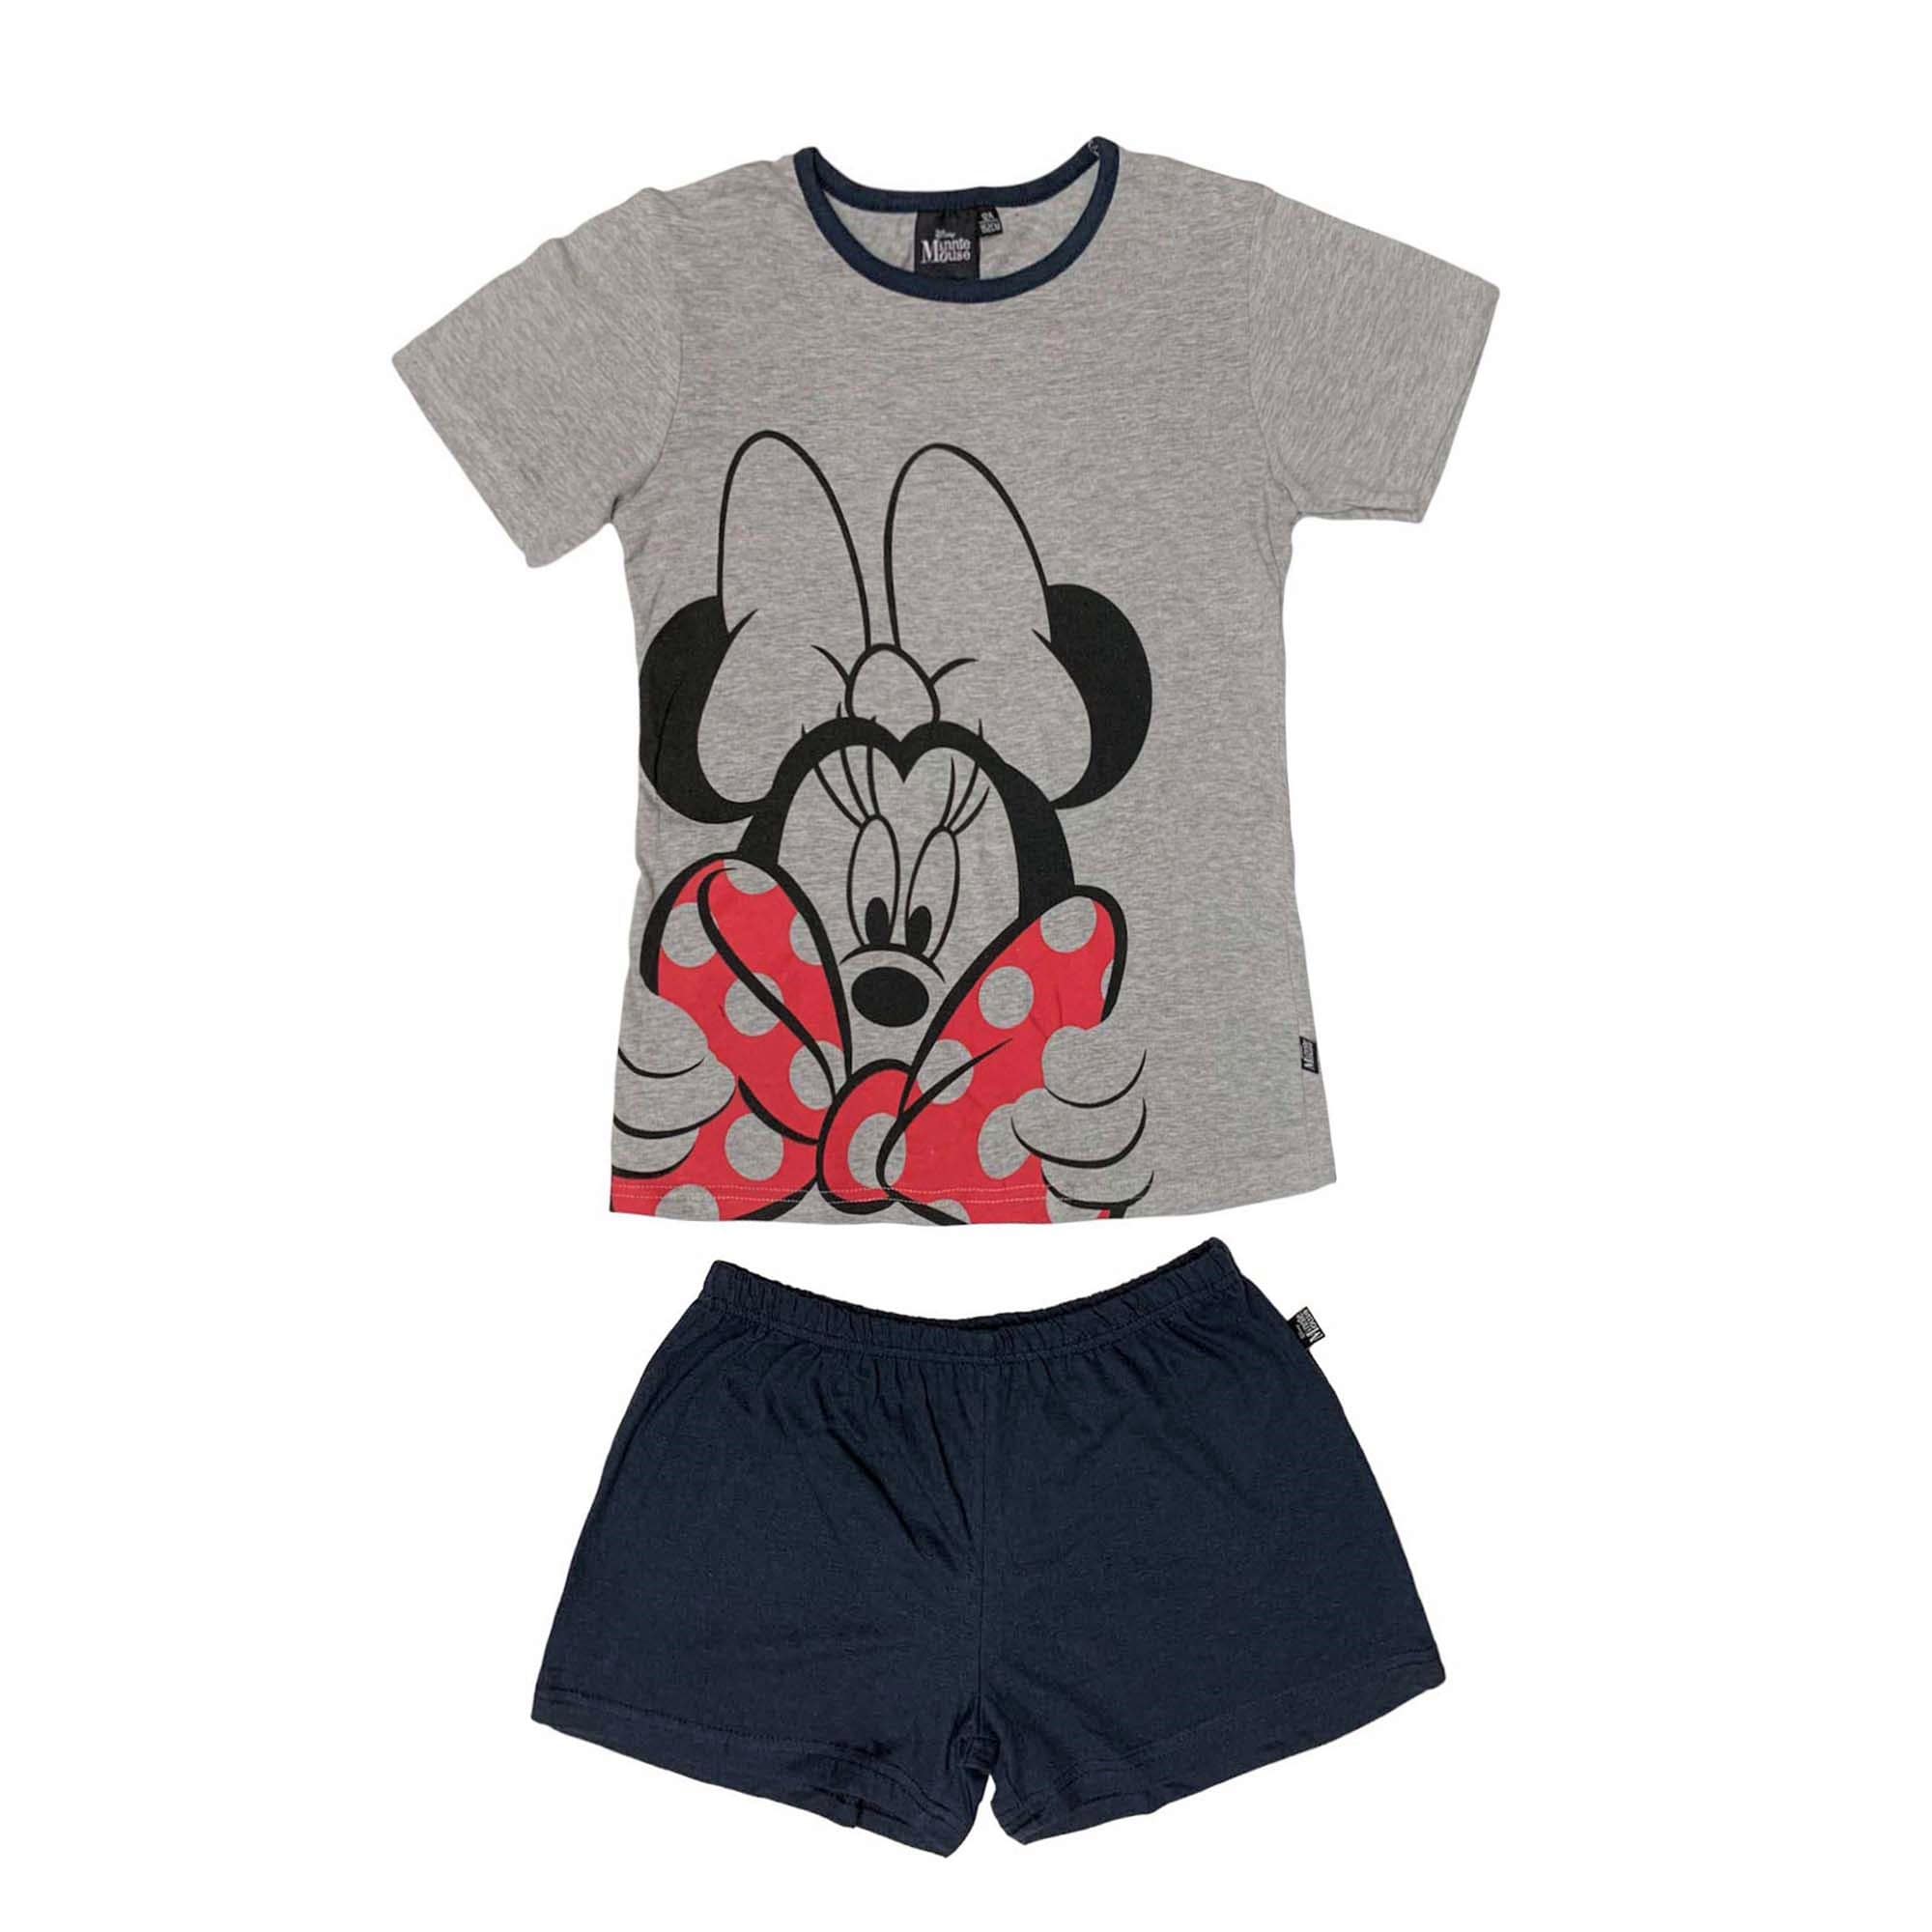 Pigiama corto bambina Disney Minnie Mouse completo t-shirt e shorts cotone 3986